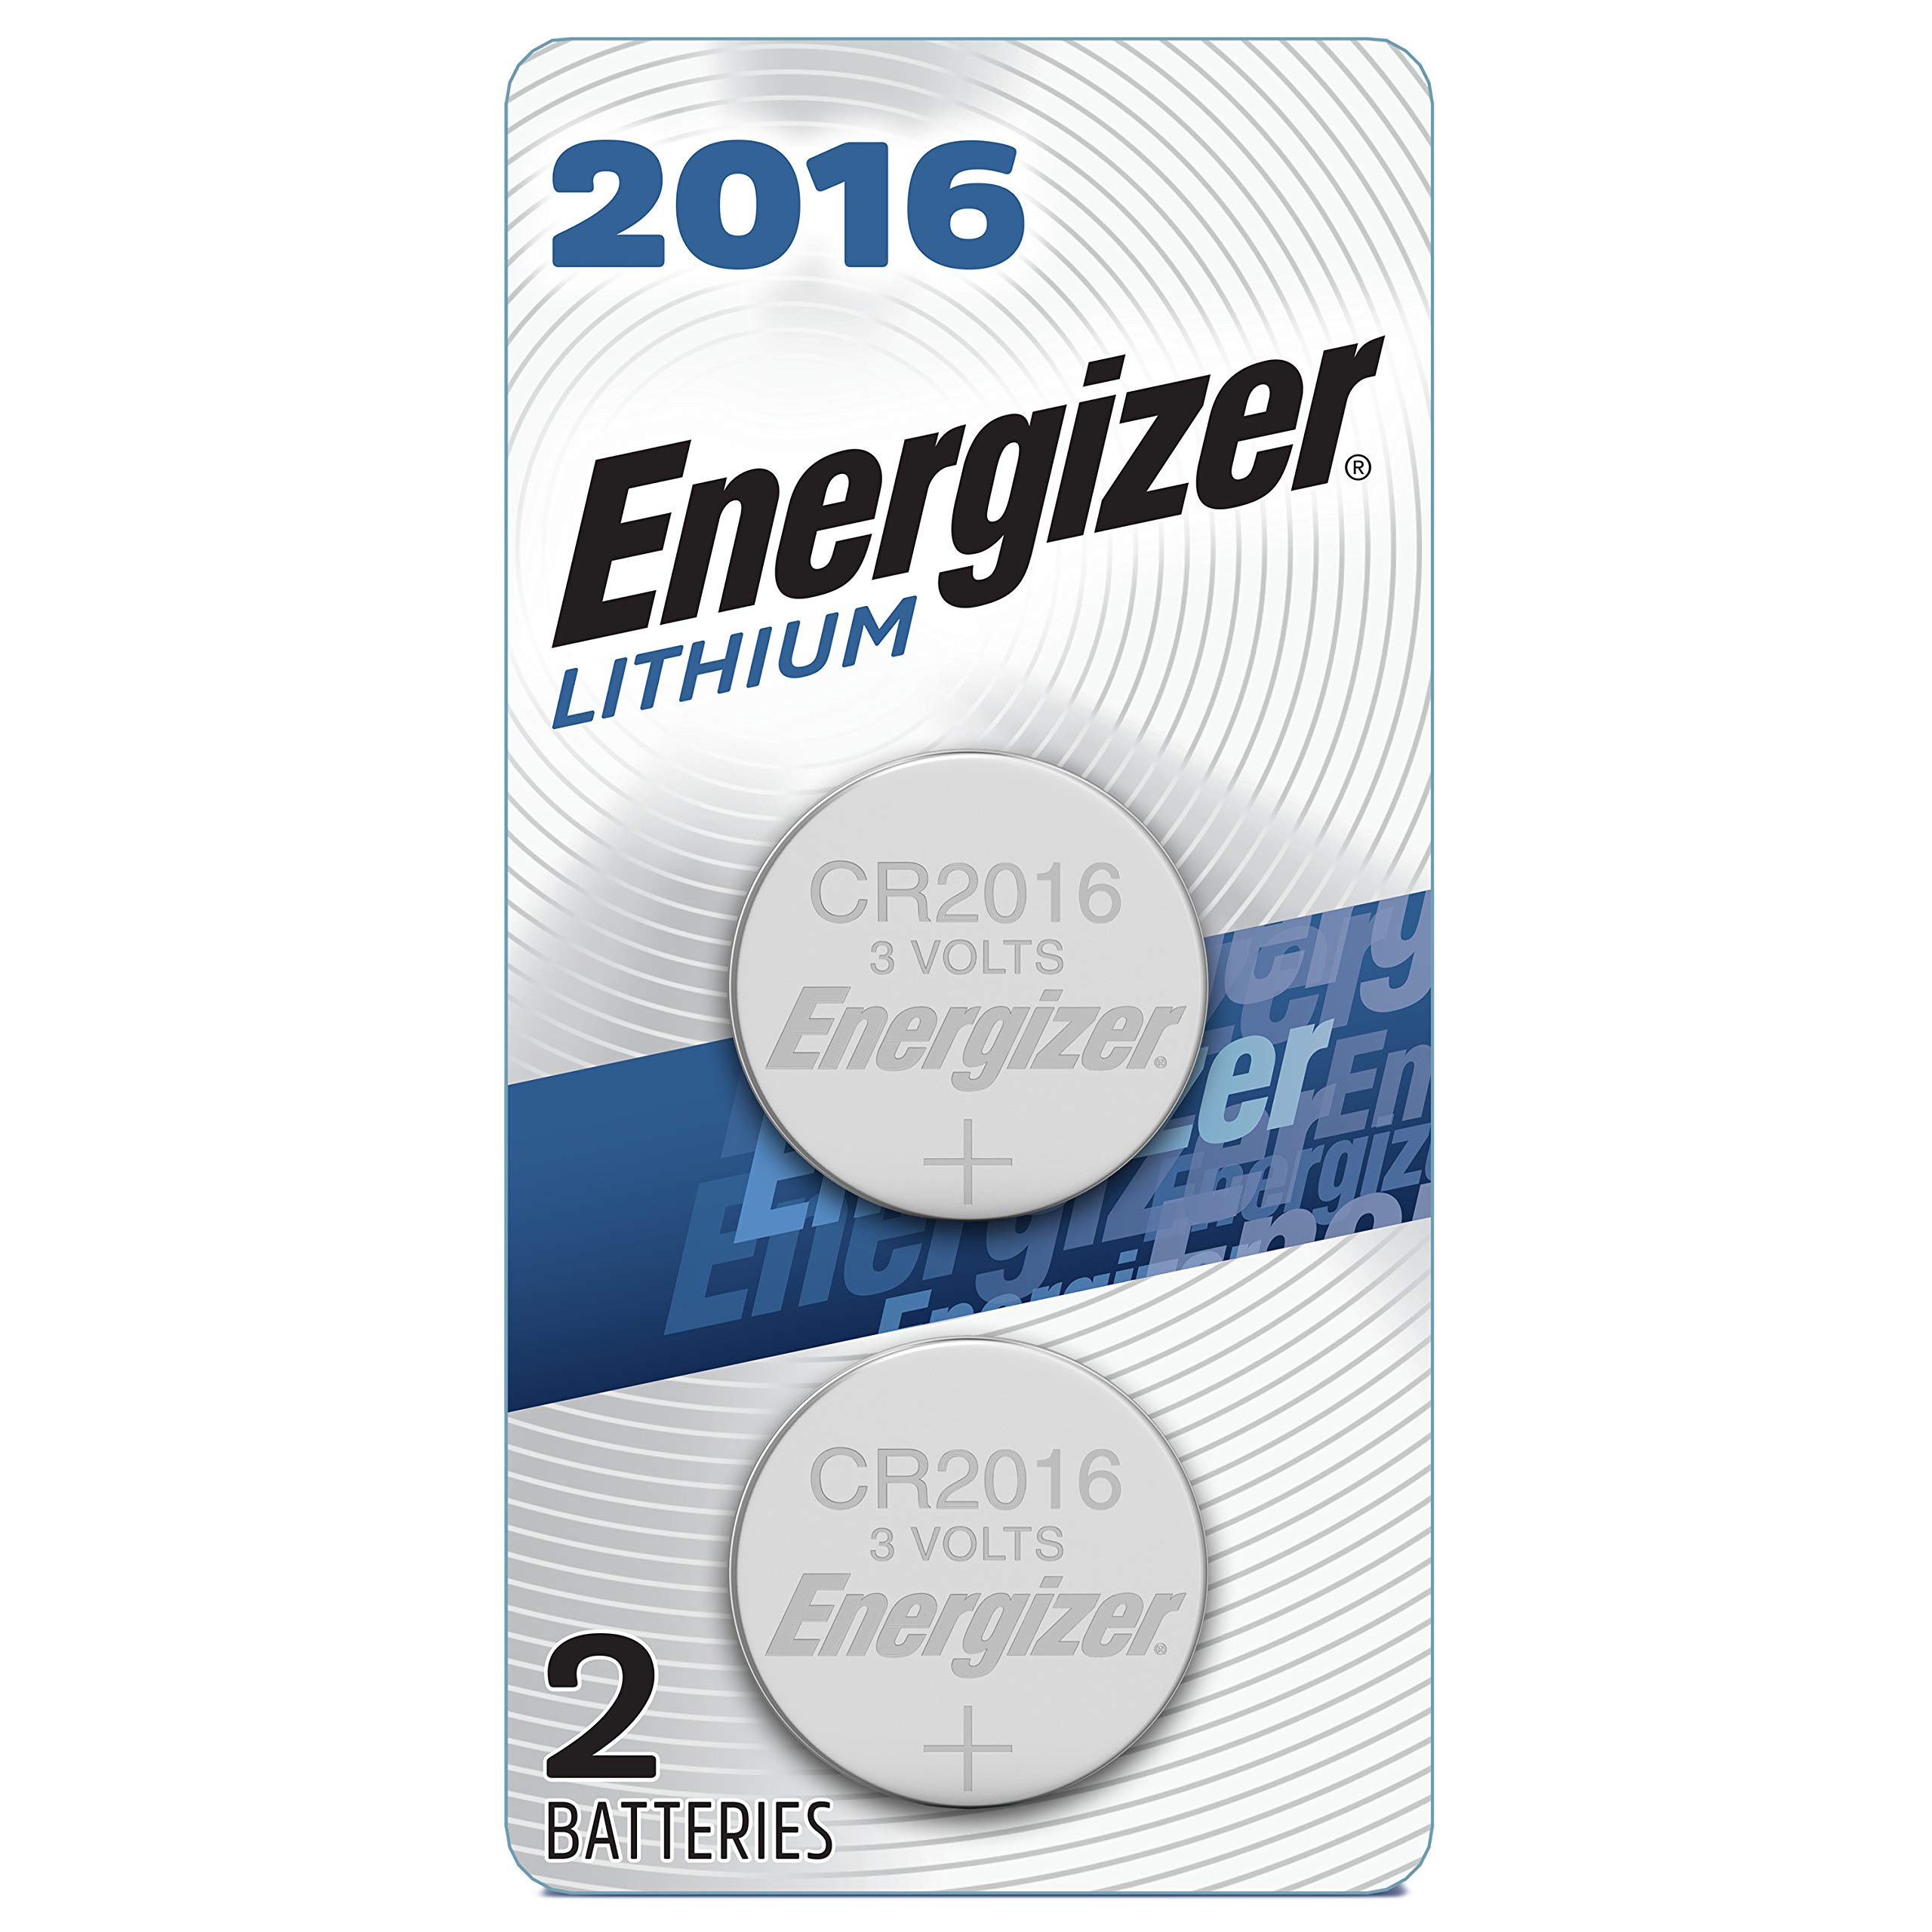 Energizer 2430 3 Volt Lithium Coin Batteries Pack